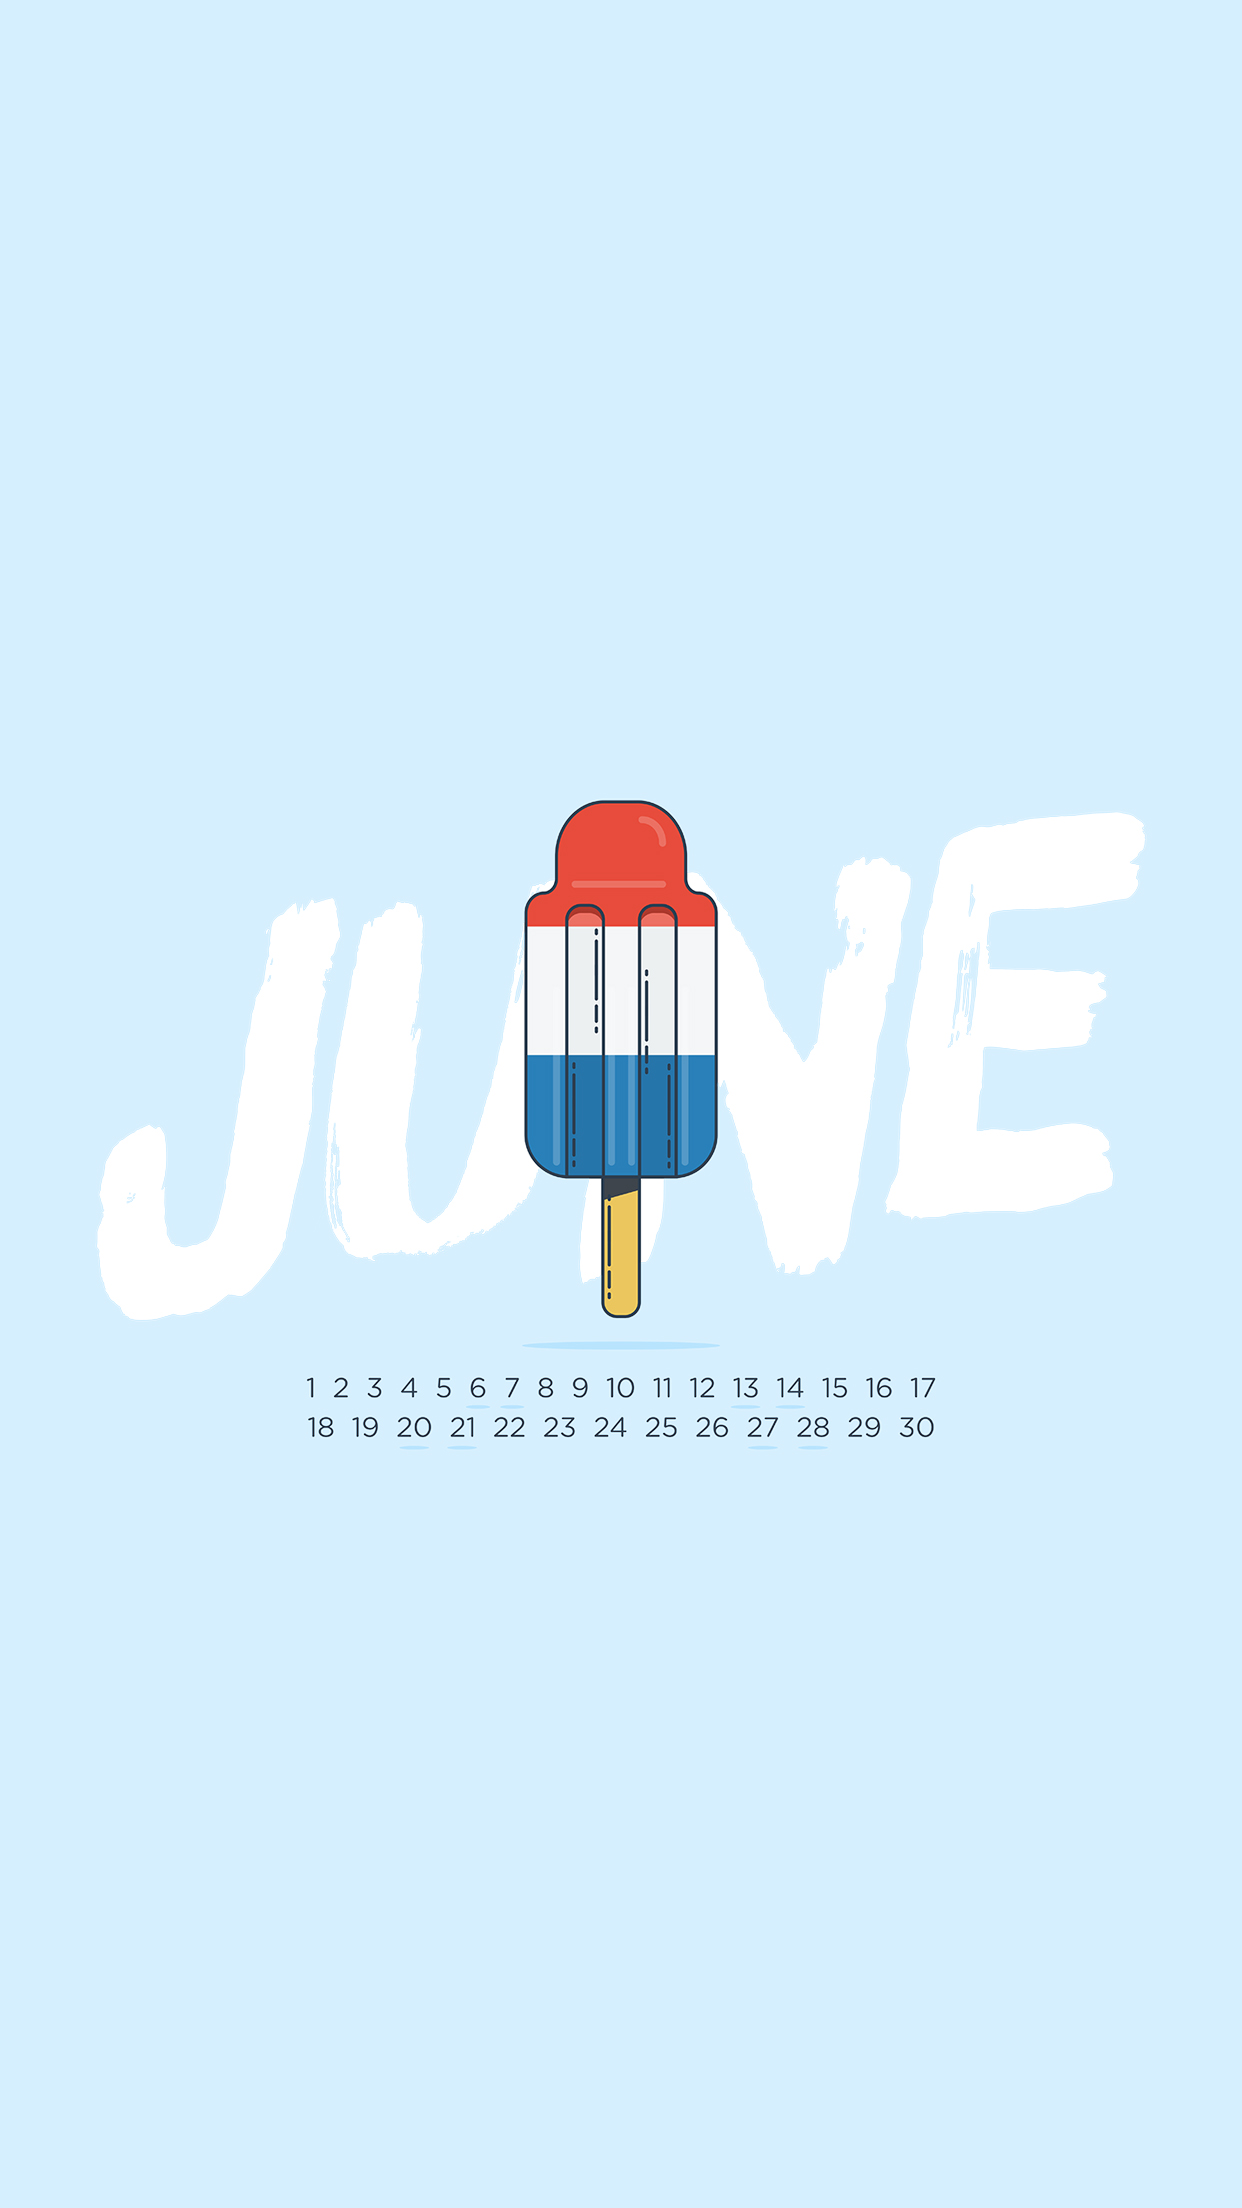 June Background